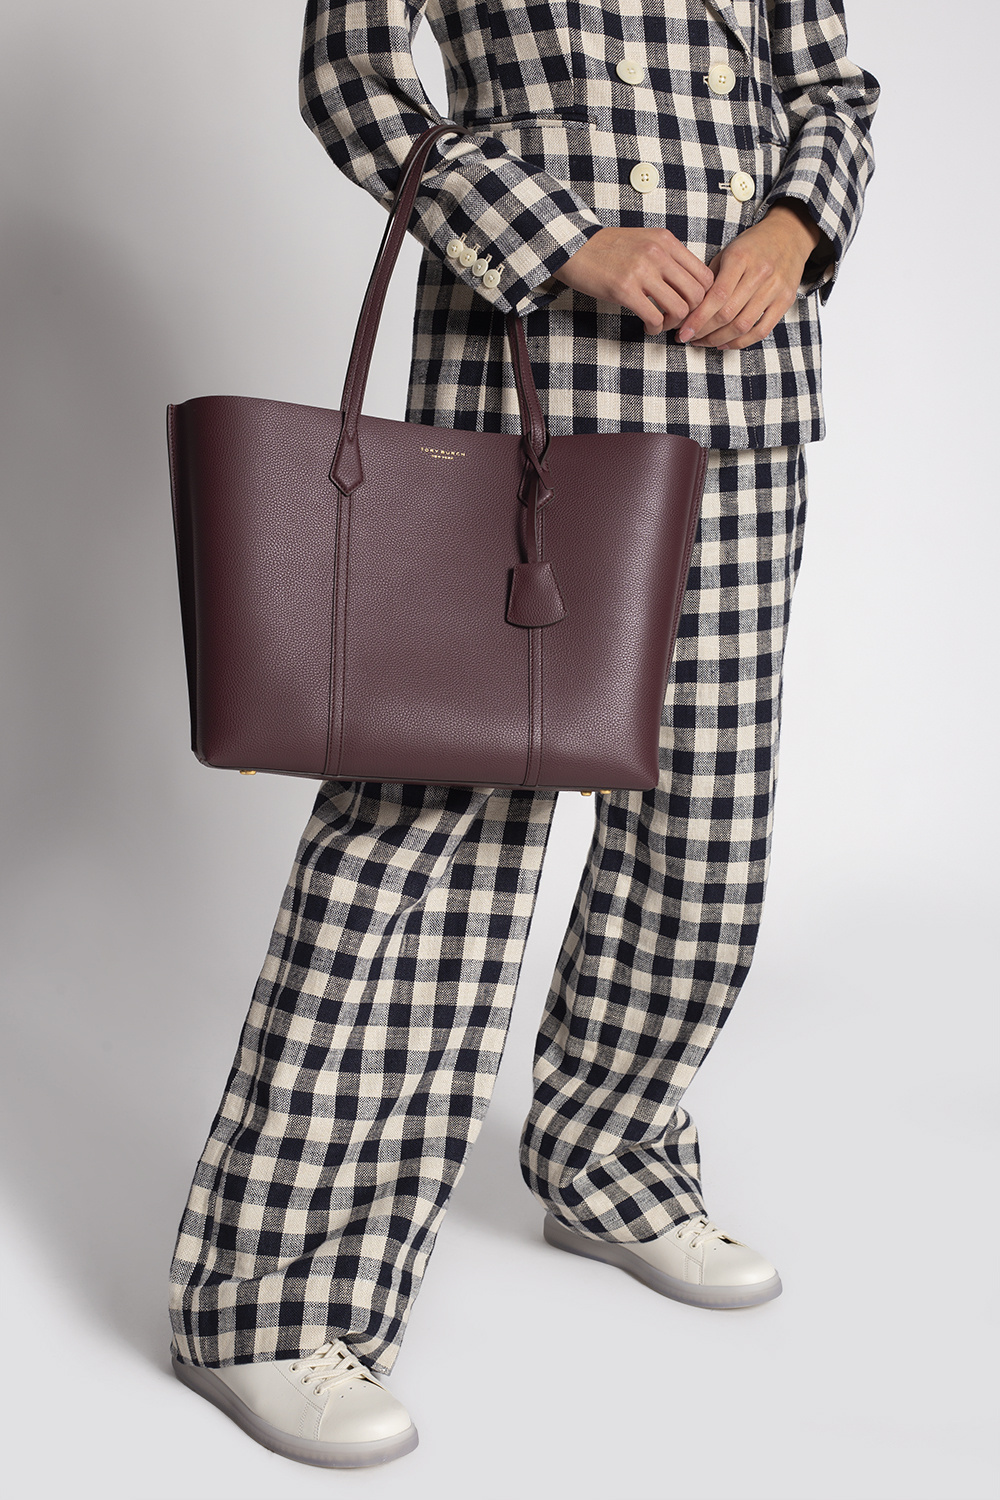 Tory Burch 'Perry Triple Compartment' shopper bag | Women's Bags | Vitkac